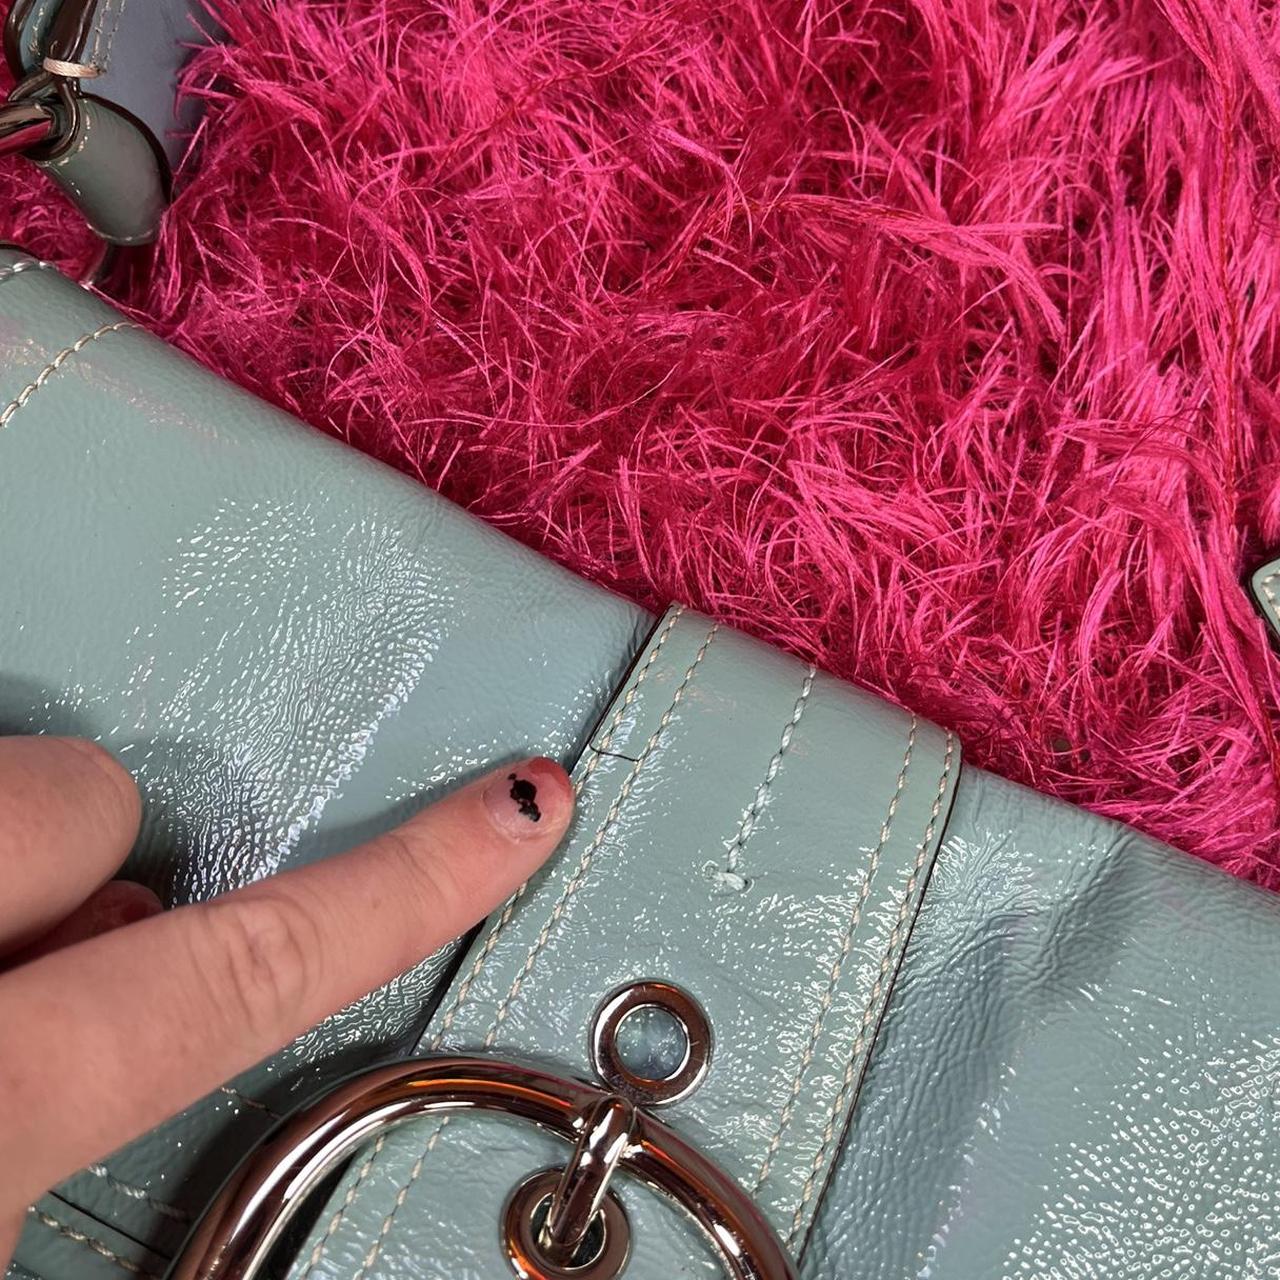 vintage Coach mini purse & matching wristlet / - Depop